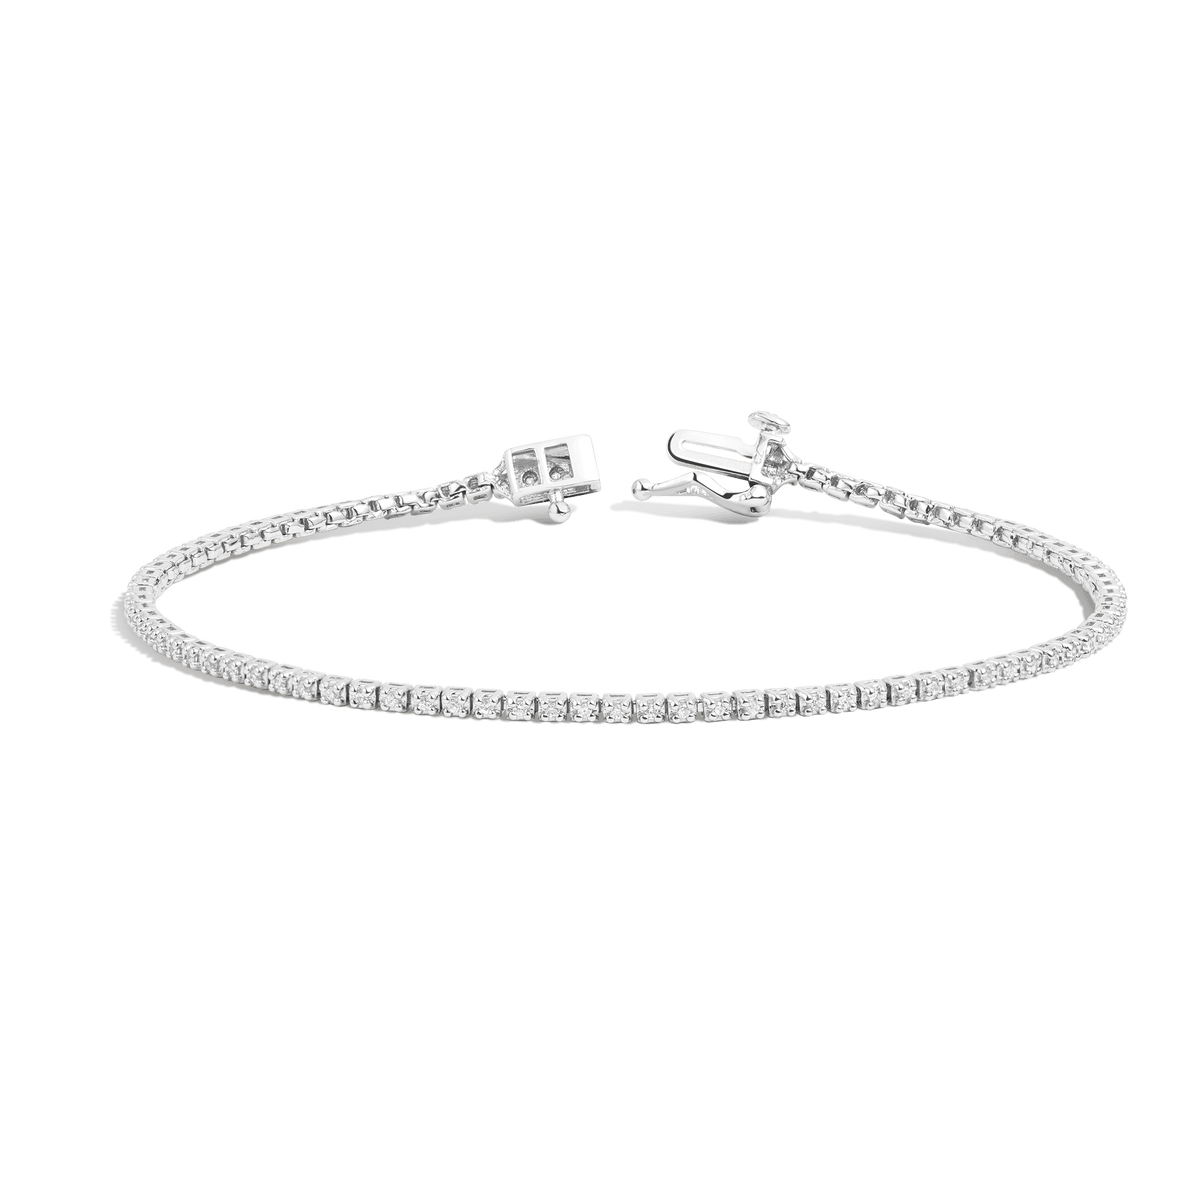 BRACELET - Mini sapphire star bracelet